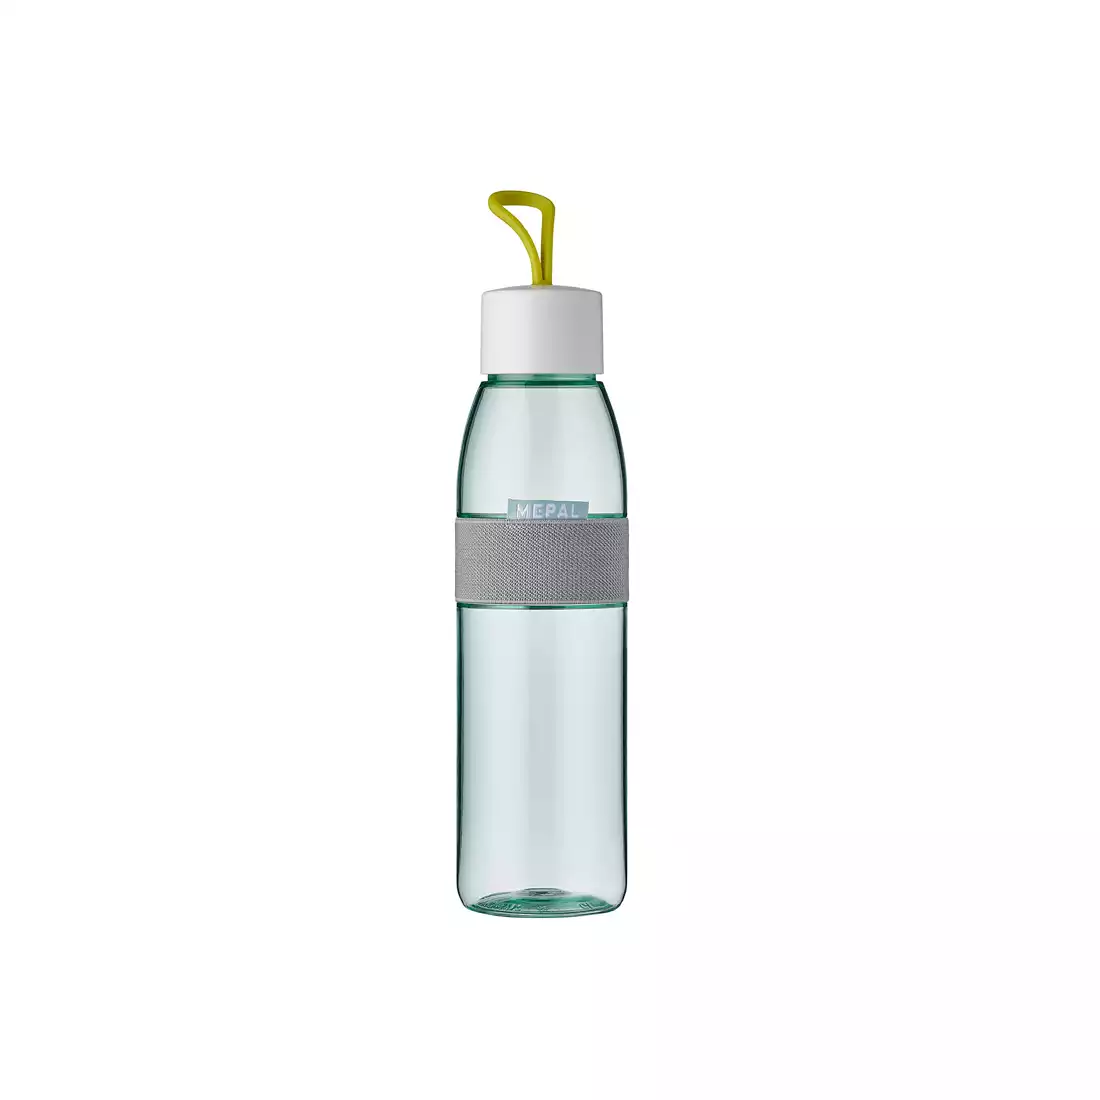 MEPAL WATER ELLIPSE wasserflasche 500 ml, lemon vibe